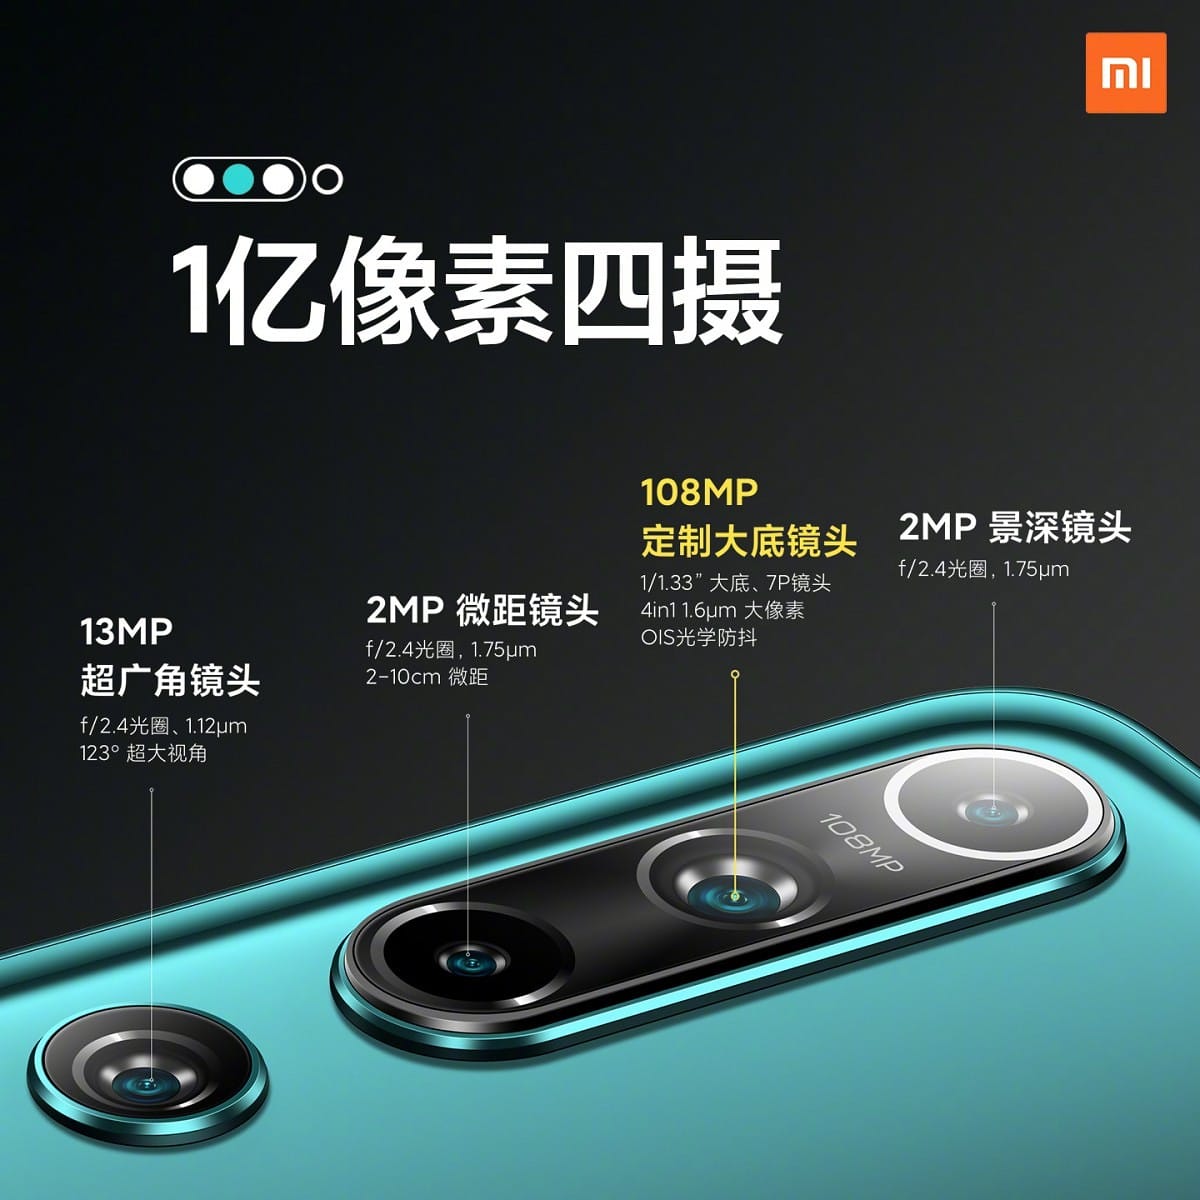 Xiaomi Mi 10 e Mi 10 Pro